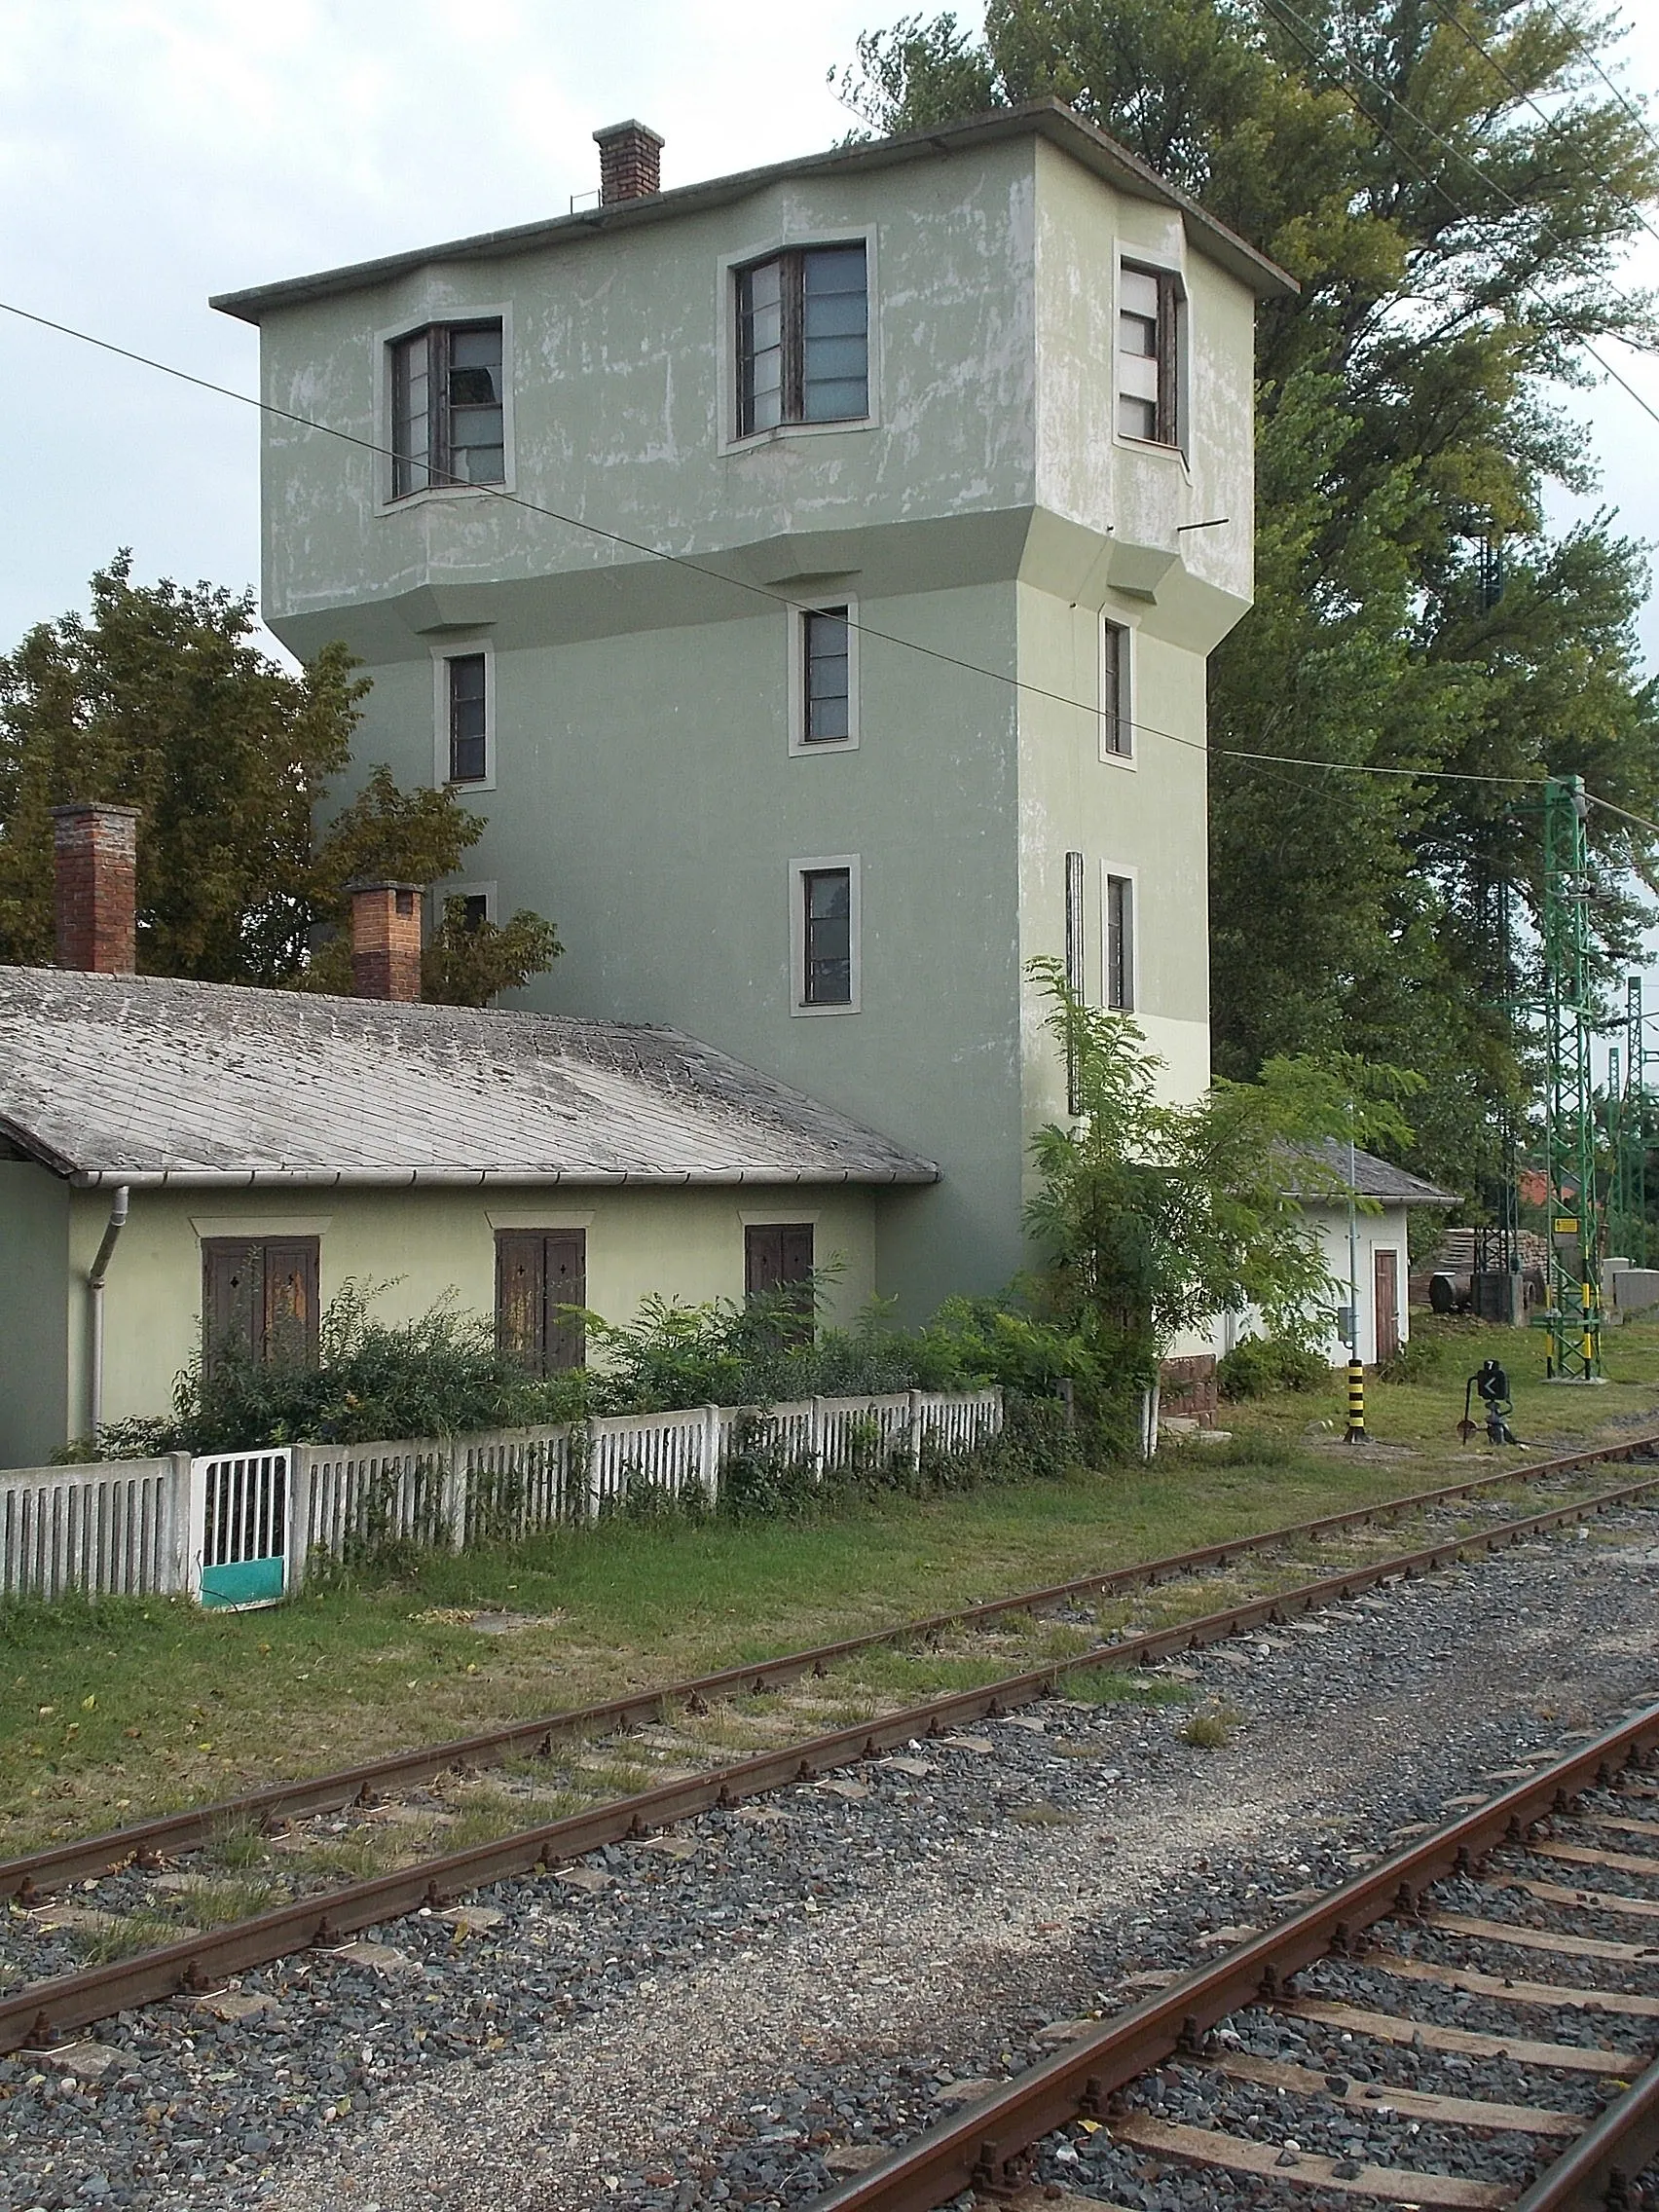 Photo showing: : Railway station former control tower? - Balatonboglár, Somogy County, Hungary.